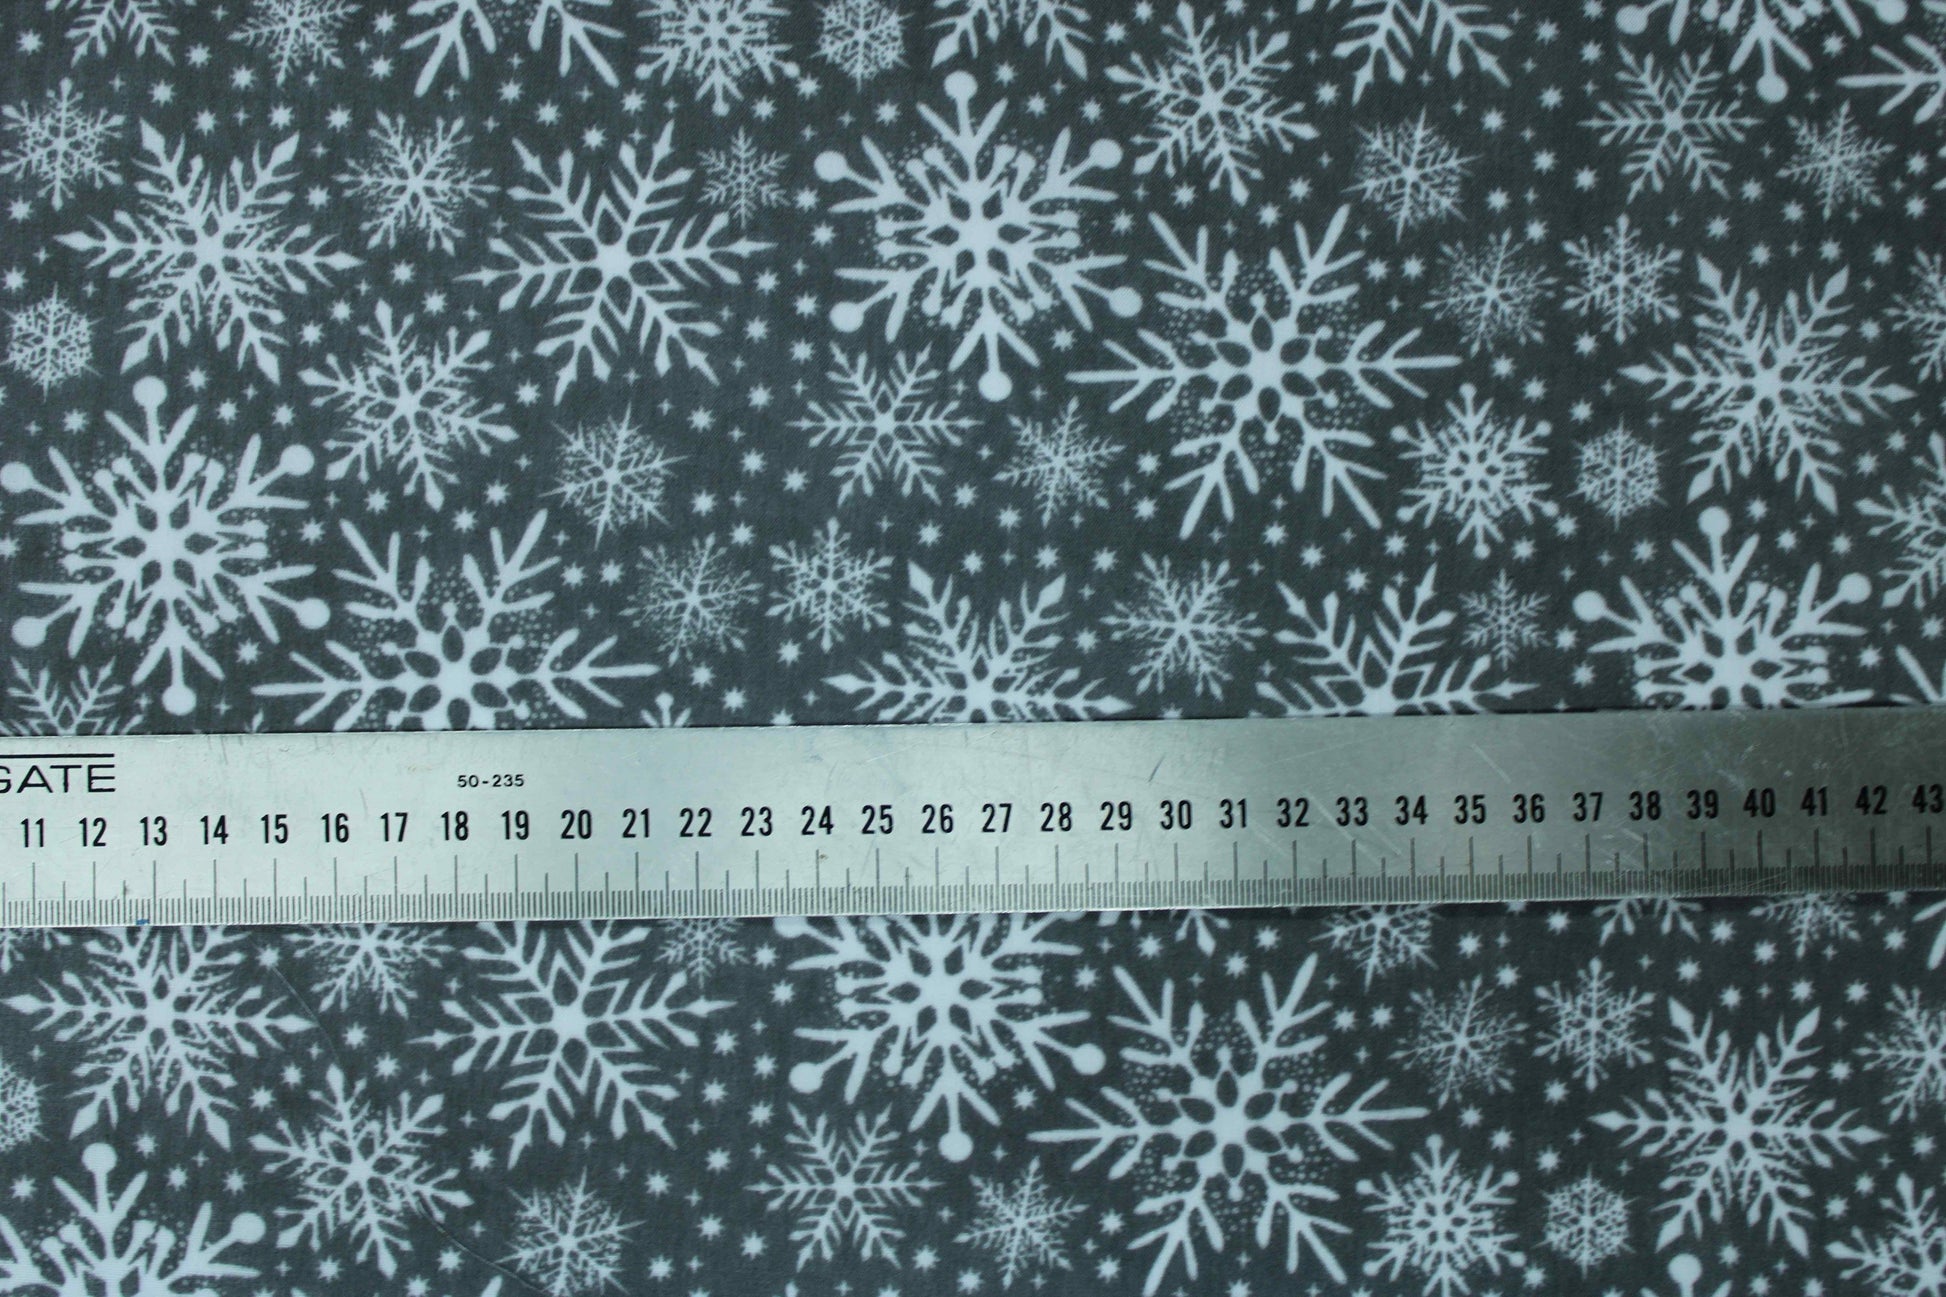 Various white snowflake designs on grey fabric